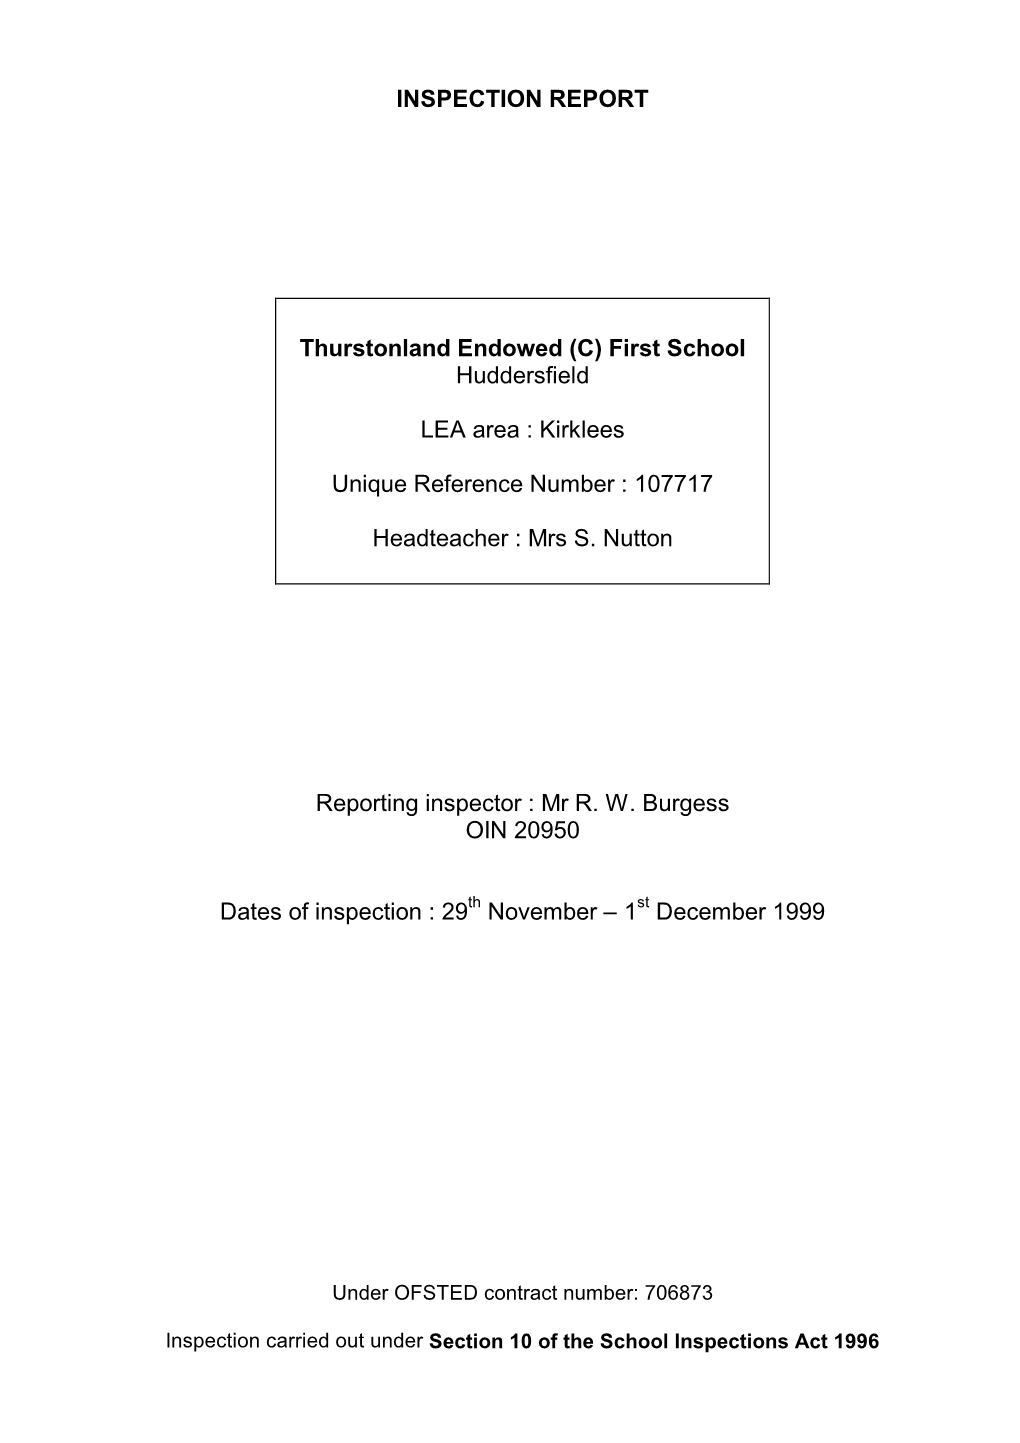 INSPECTION REPORT Thurstonland Endowed (C) First School